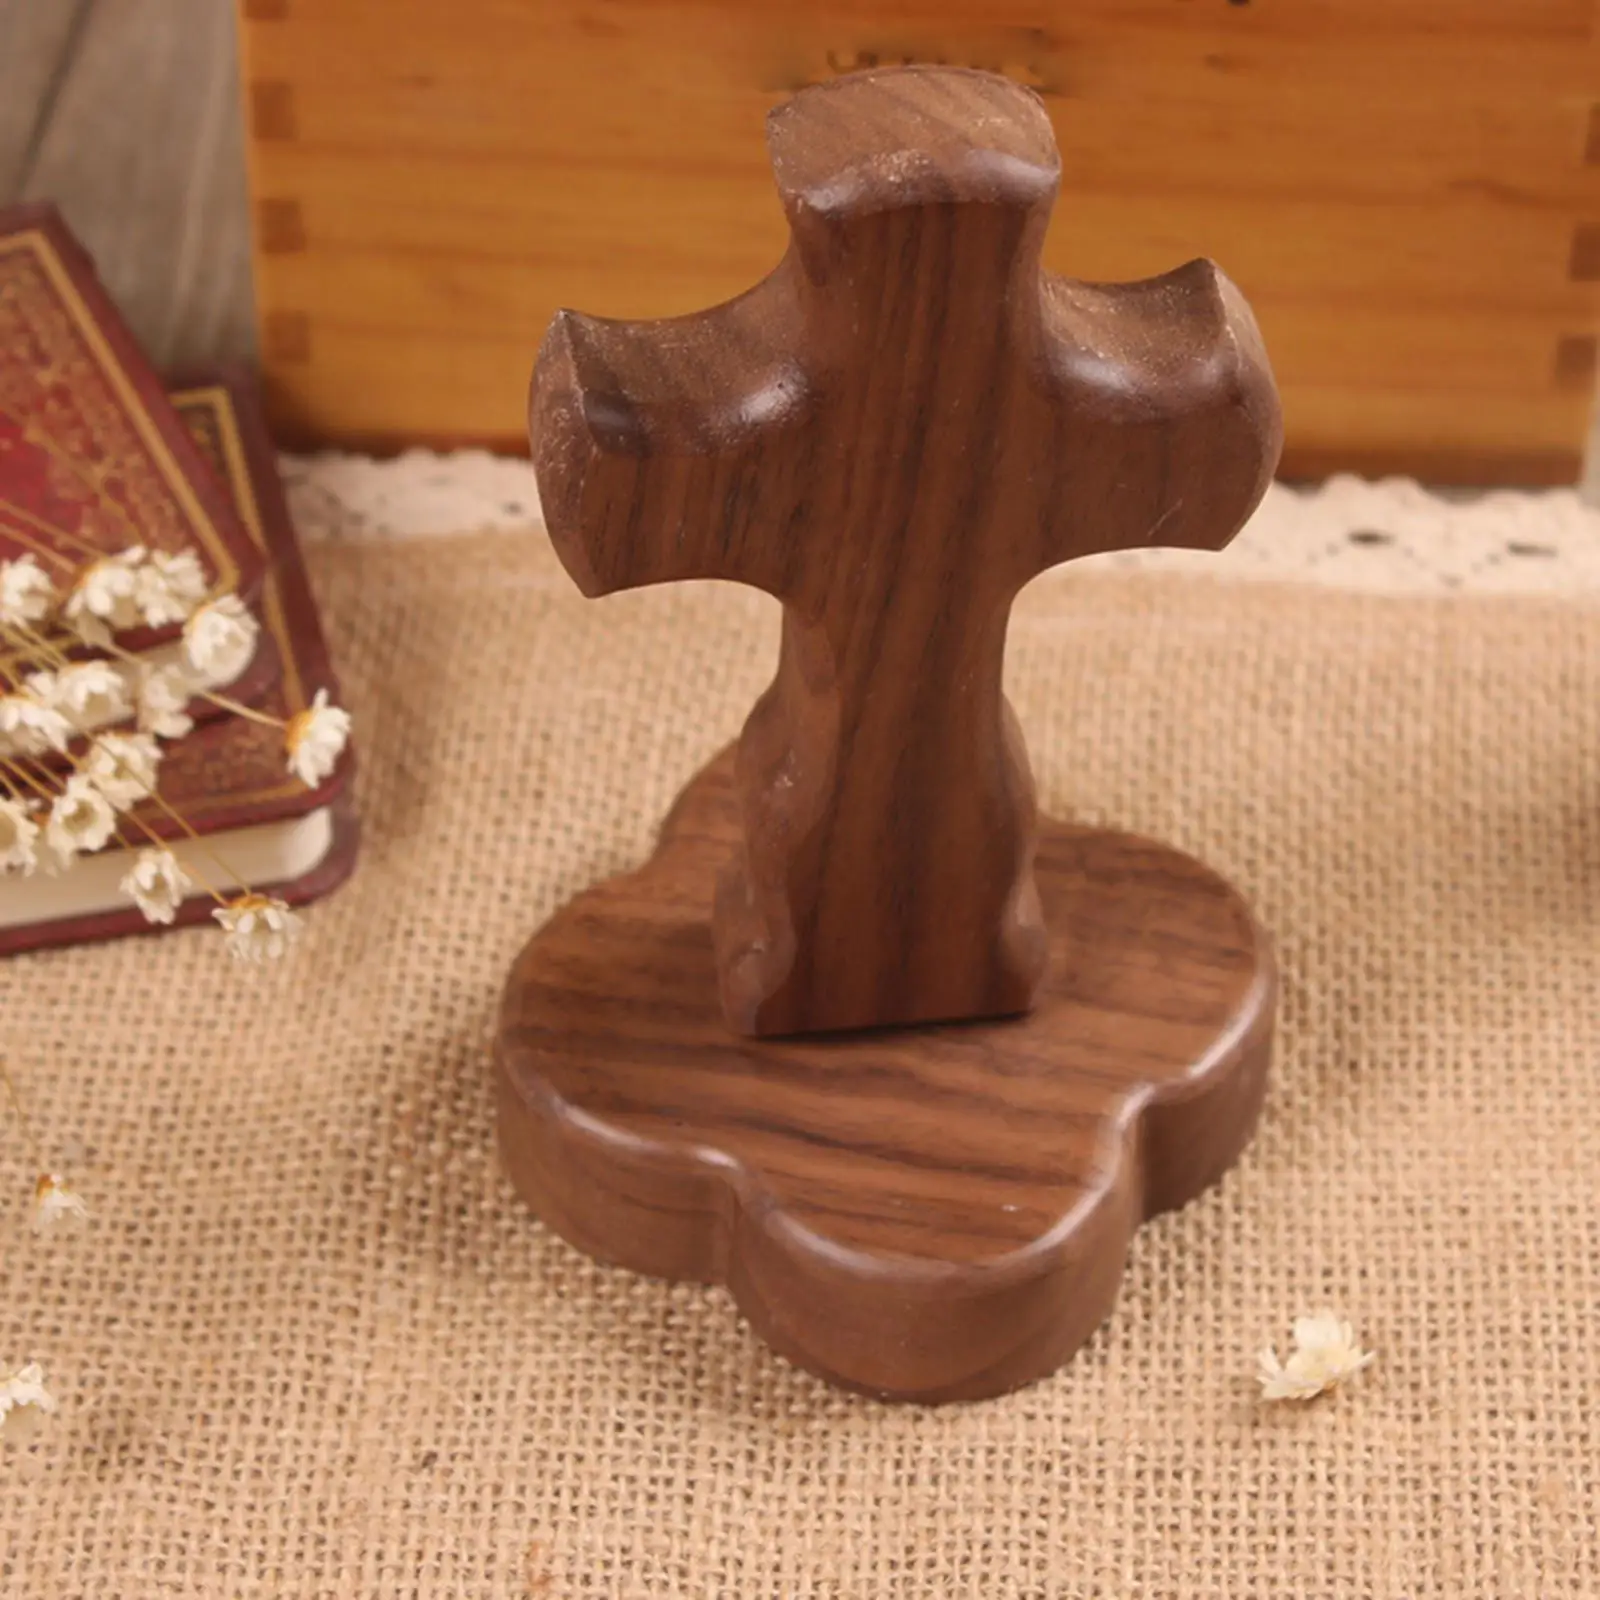 walnut Desktop Crucifix Figurines Religious Prayer Cross Catholic Crucifix with Stand for Memorial Chapel Thanksgiving